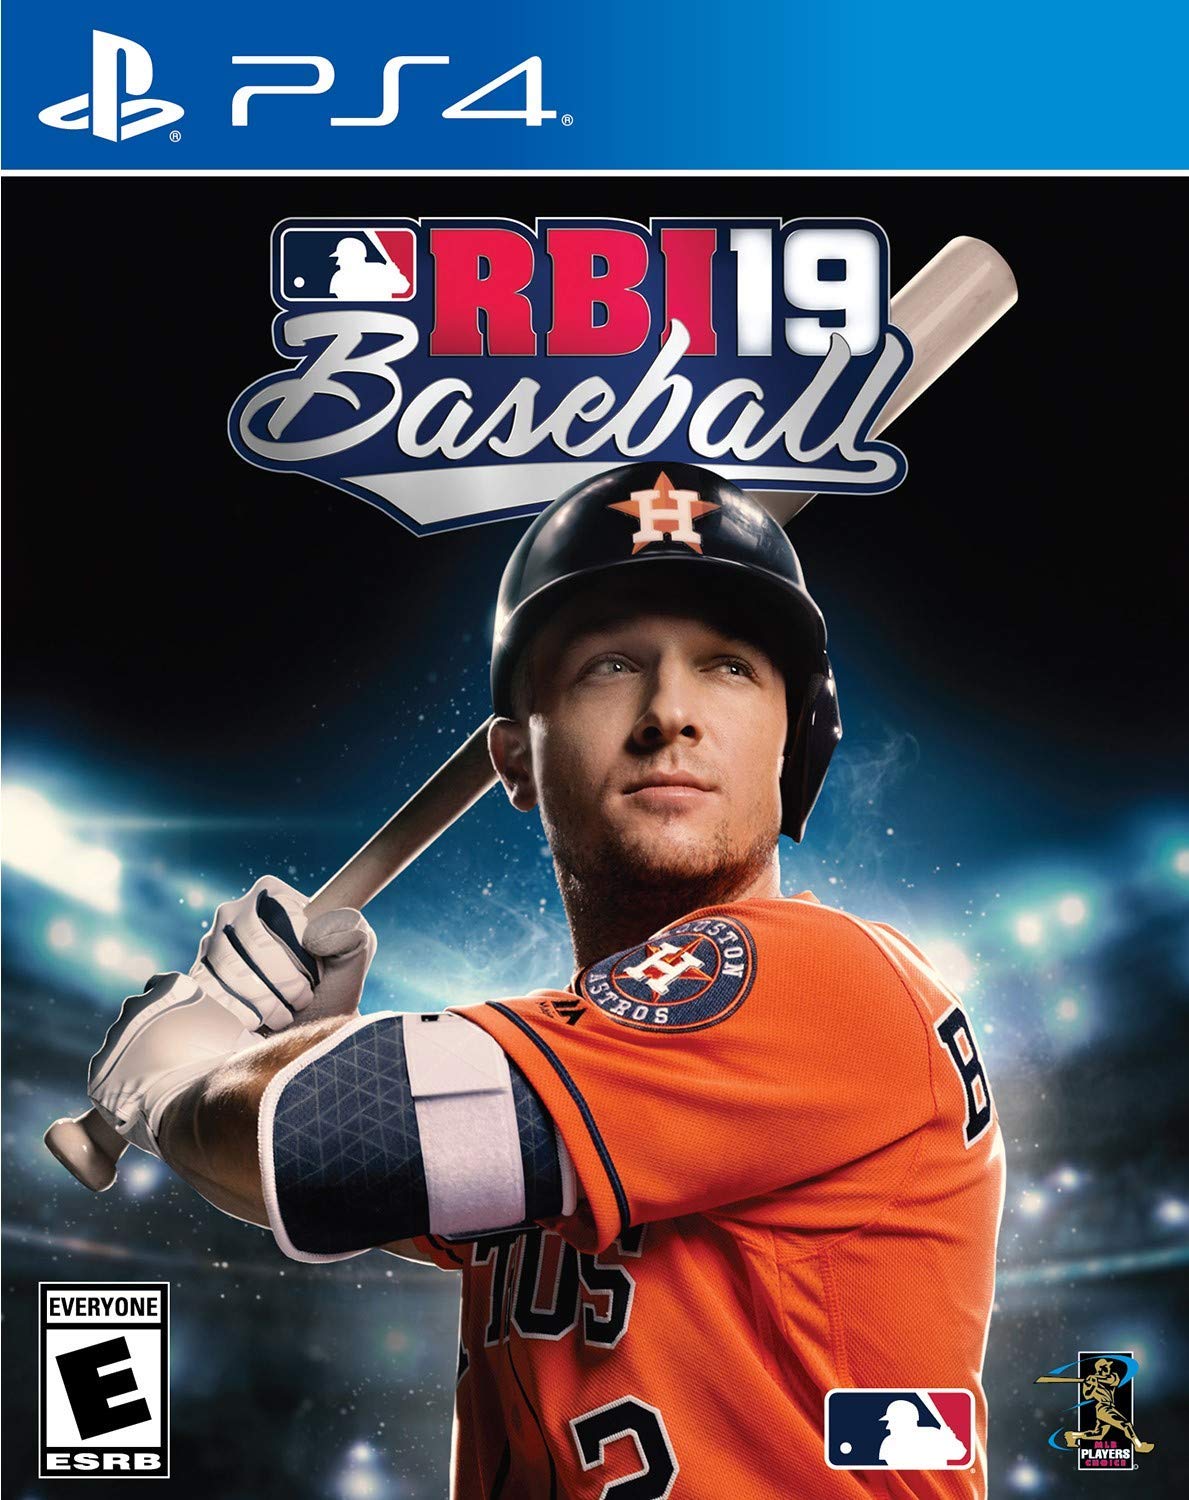 RBI Baseball 19 (PS4), MLB Advanced Media